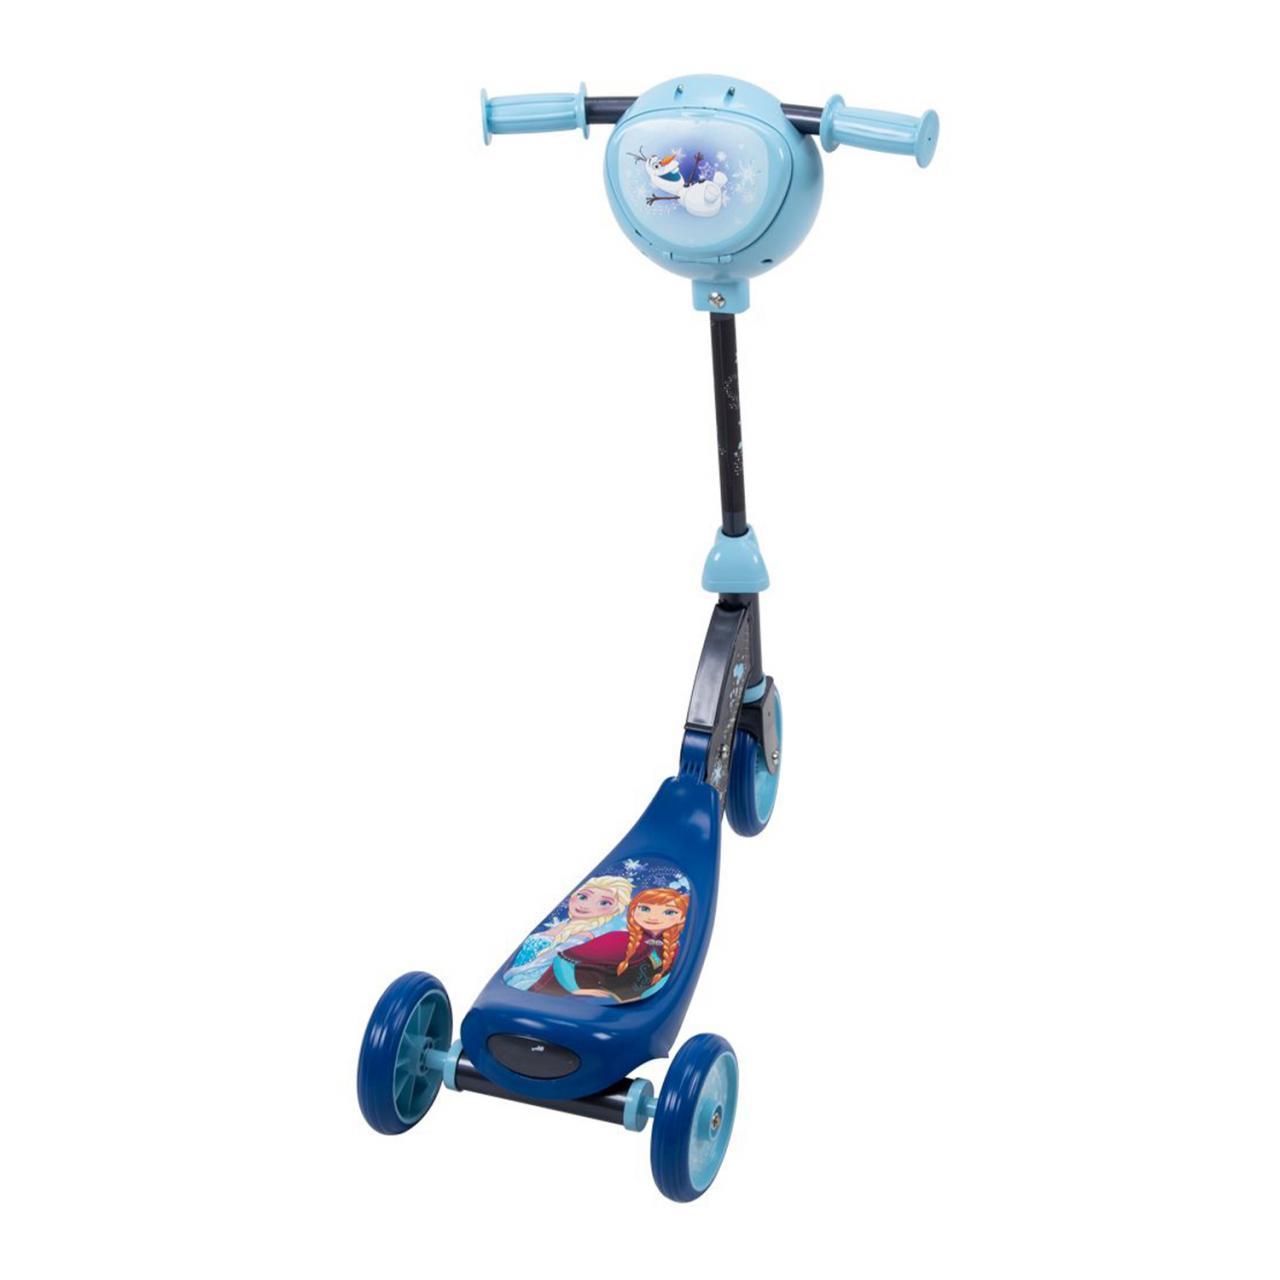 Huffy 38679 Disney Frozen Girls' Preschool Toddler Scooter with Storage